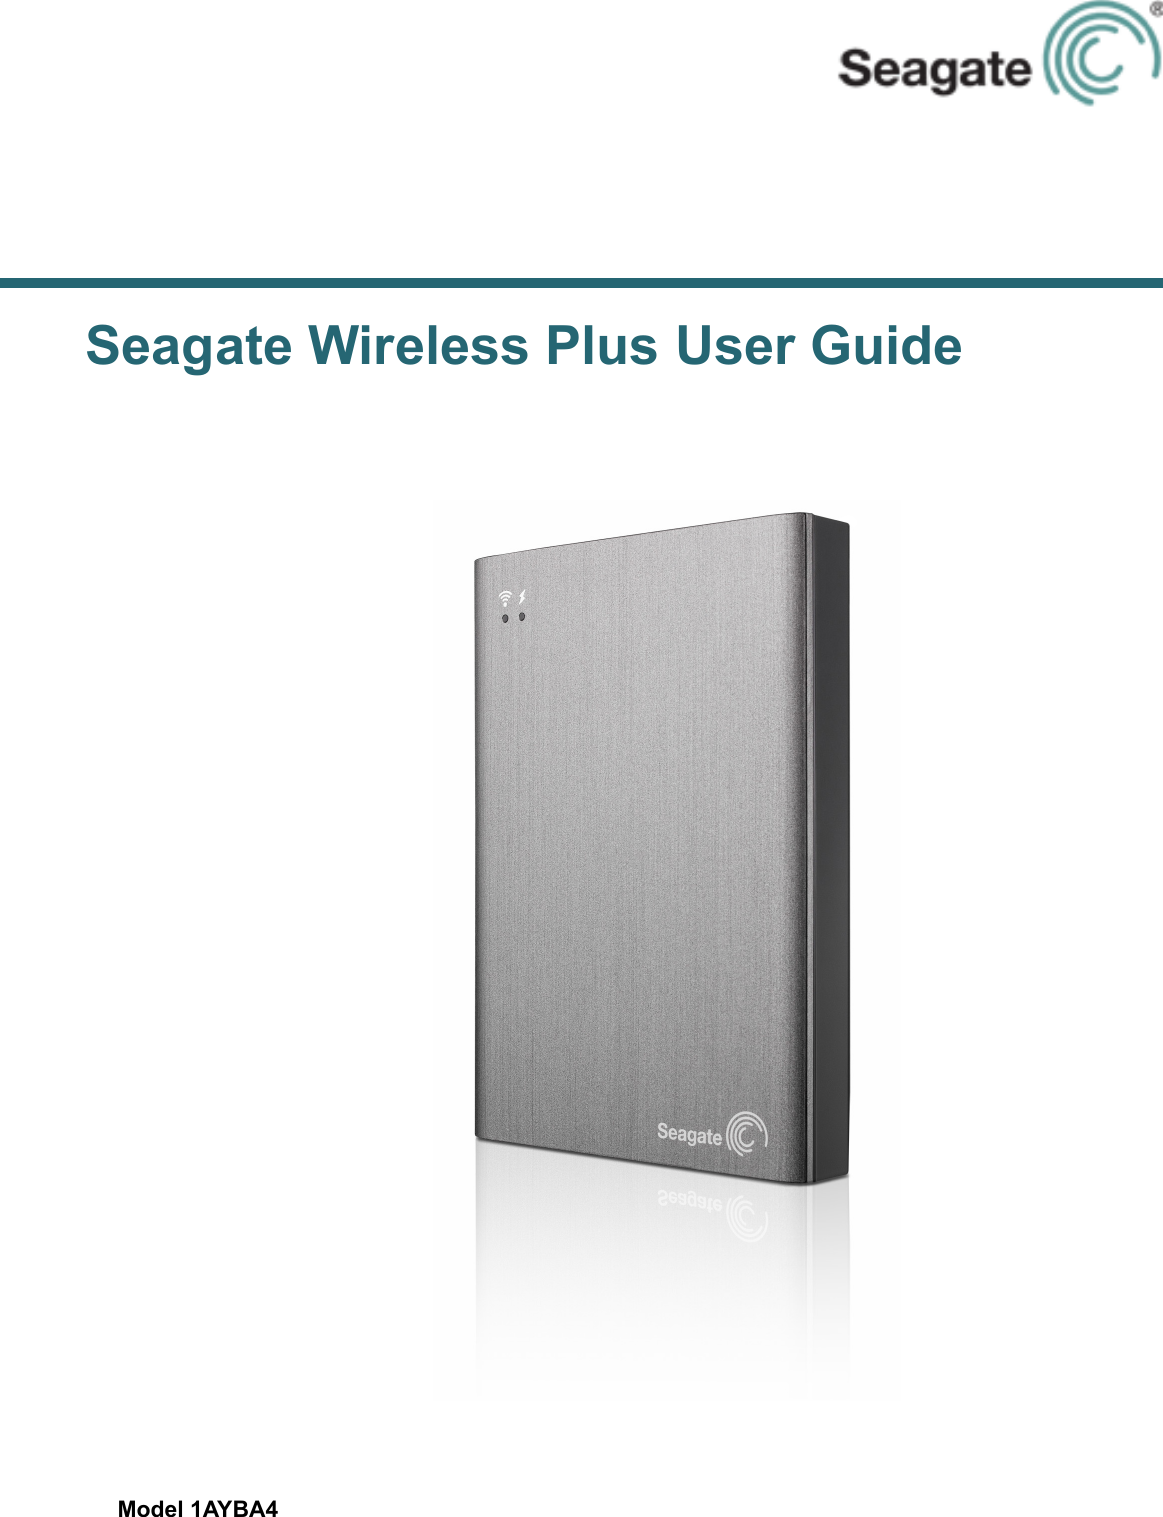 Seagate Wireless Plus User GuideModel 1AYBA4